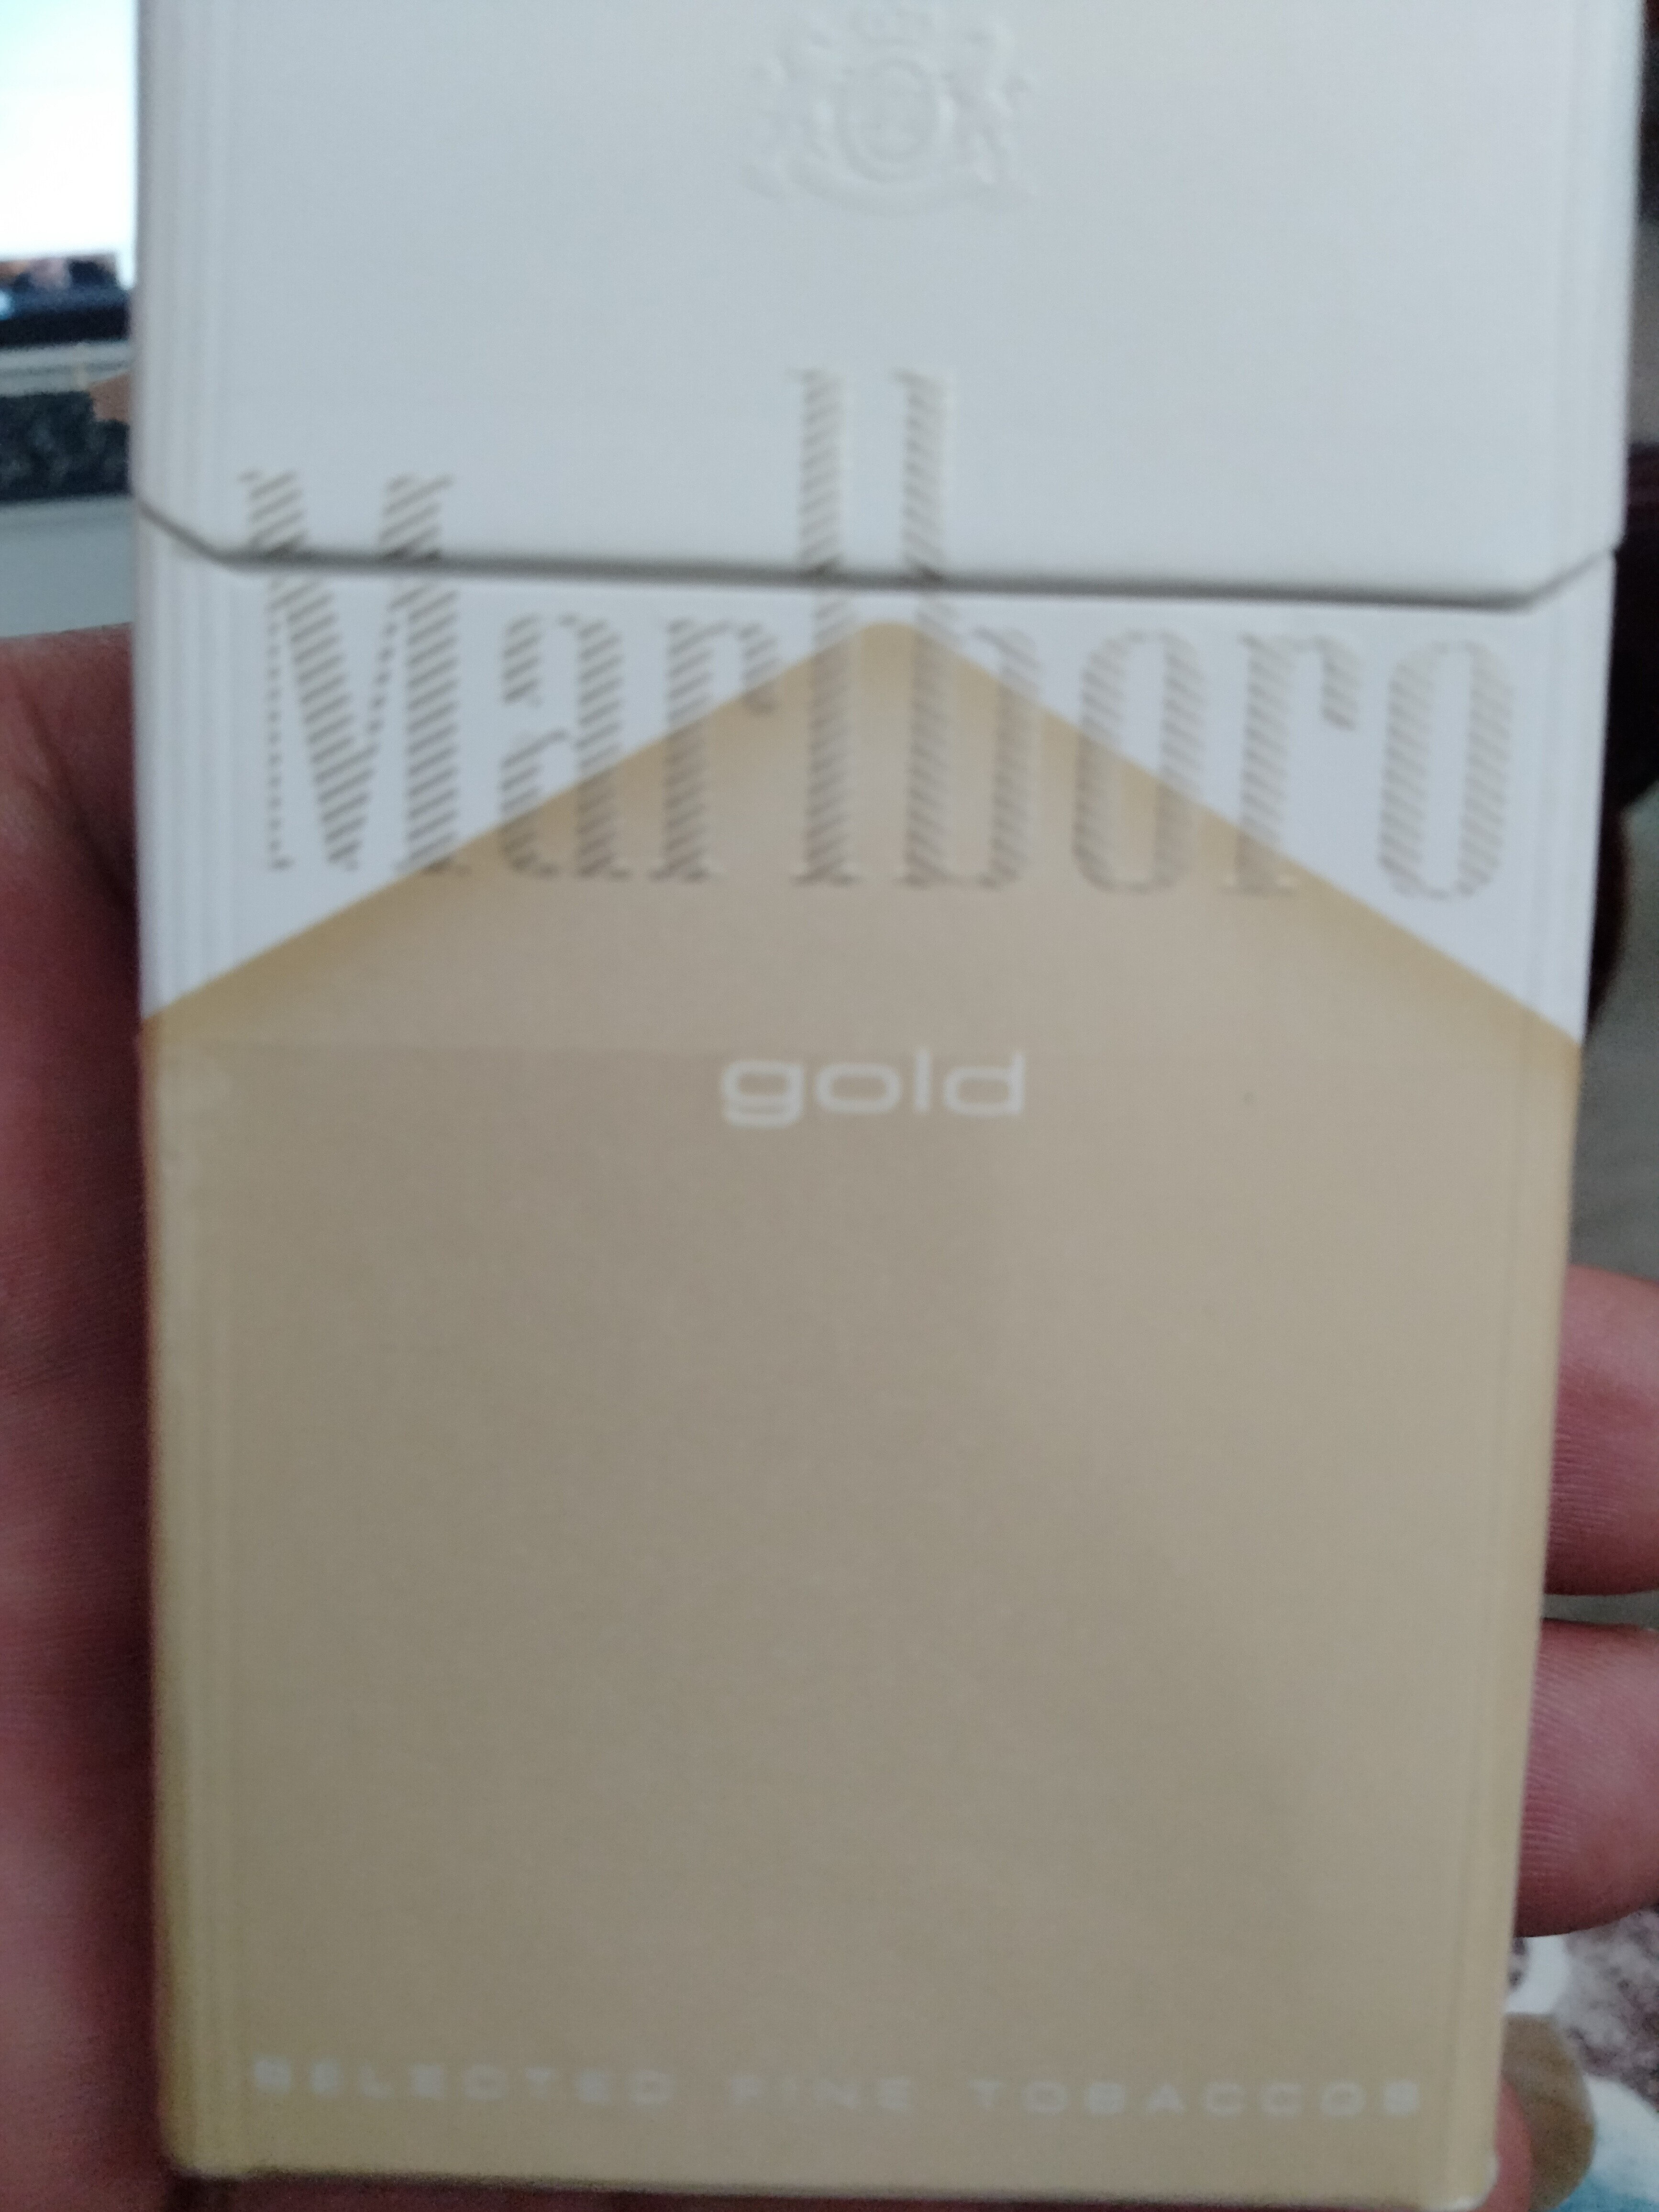 Marlboro Gold - Product - fr